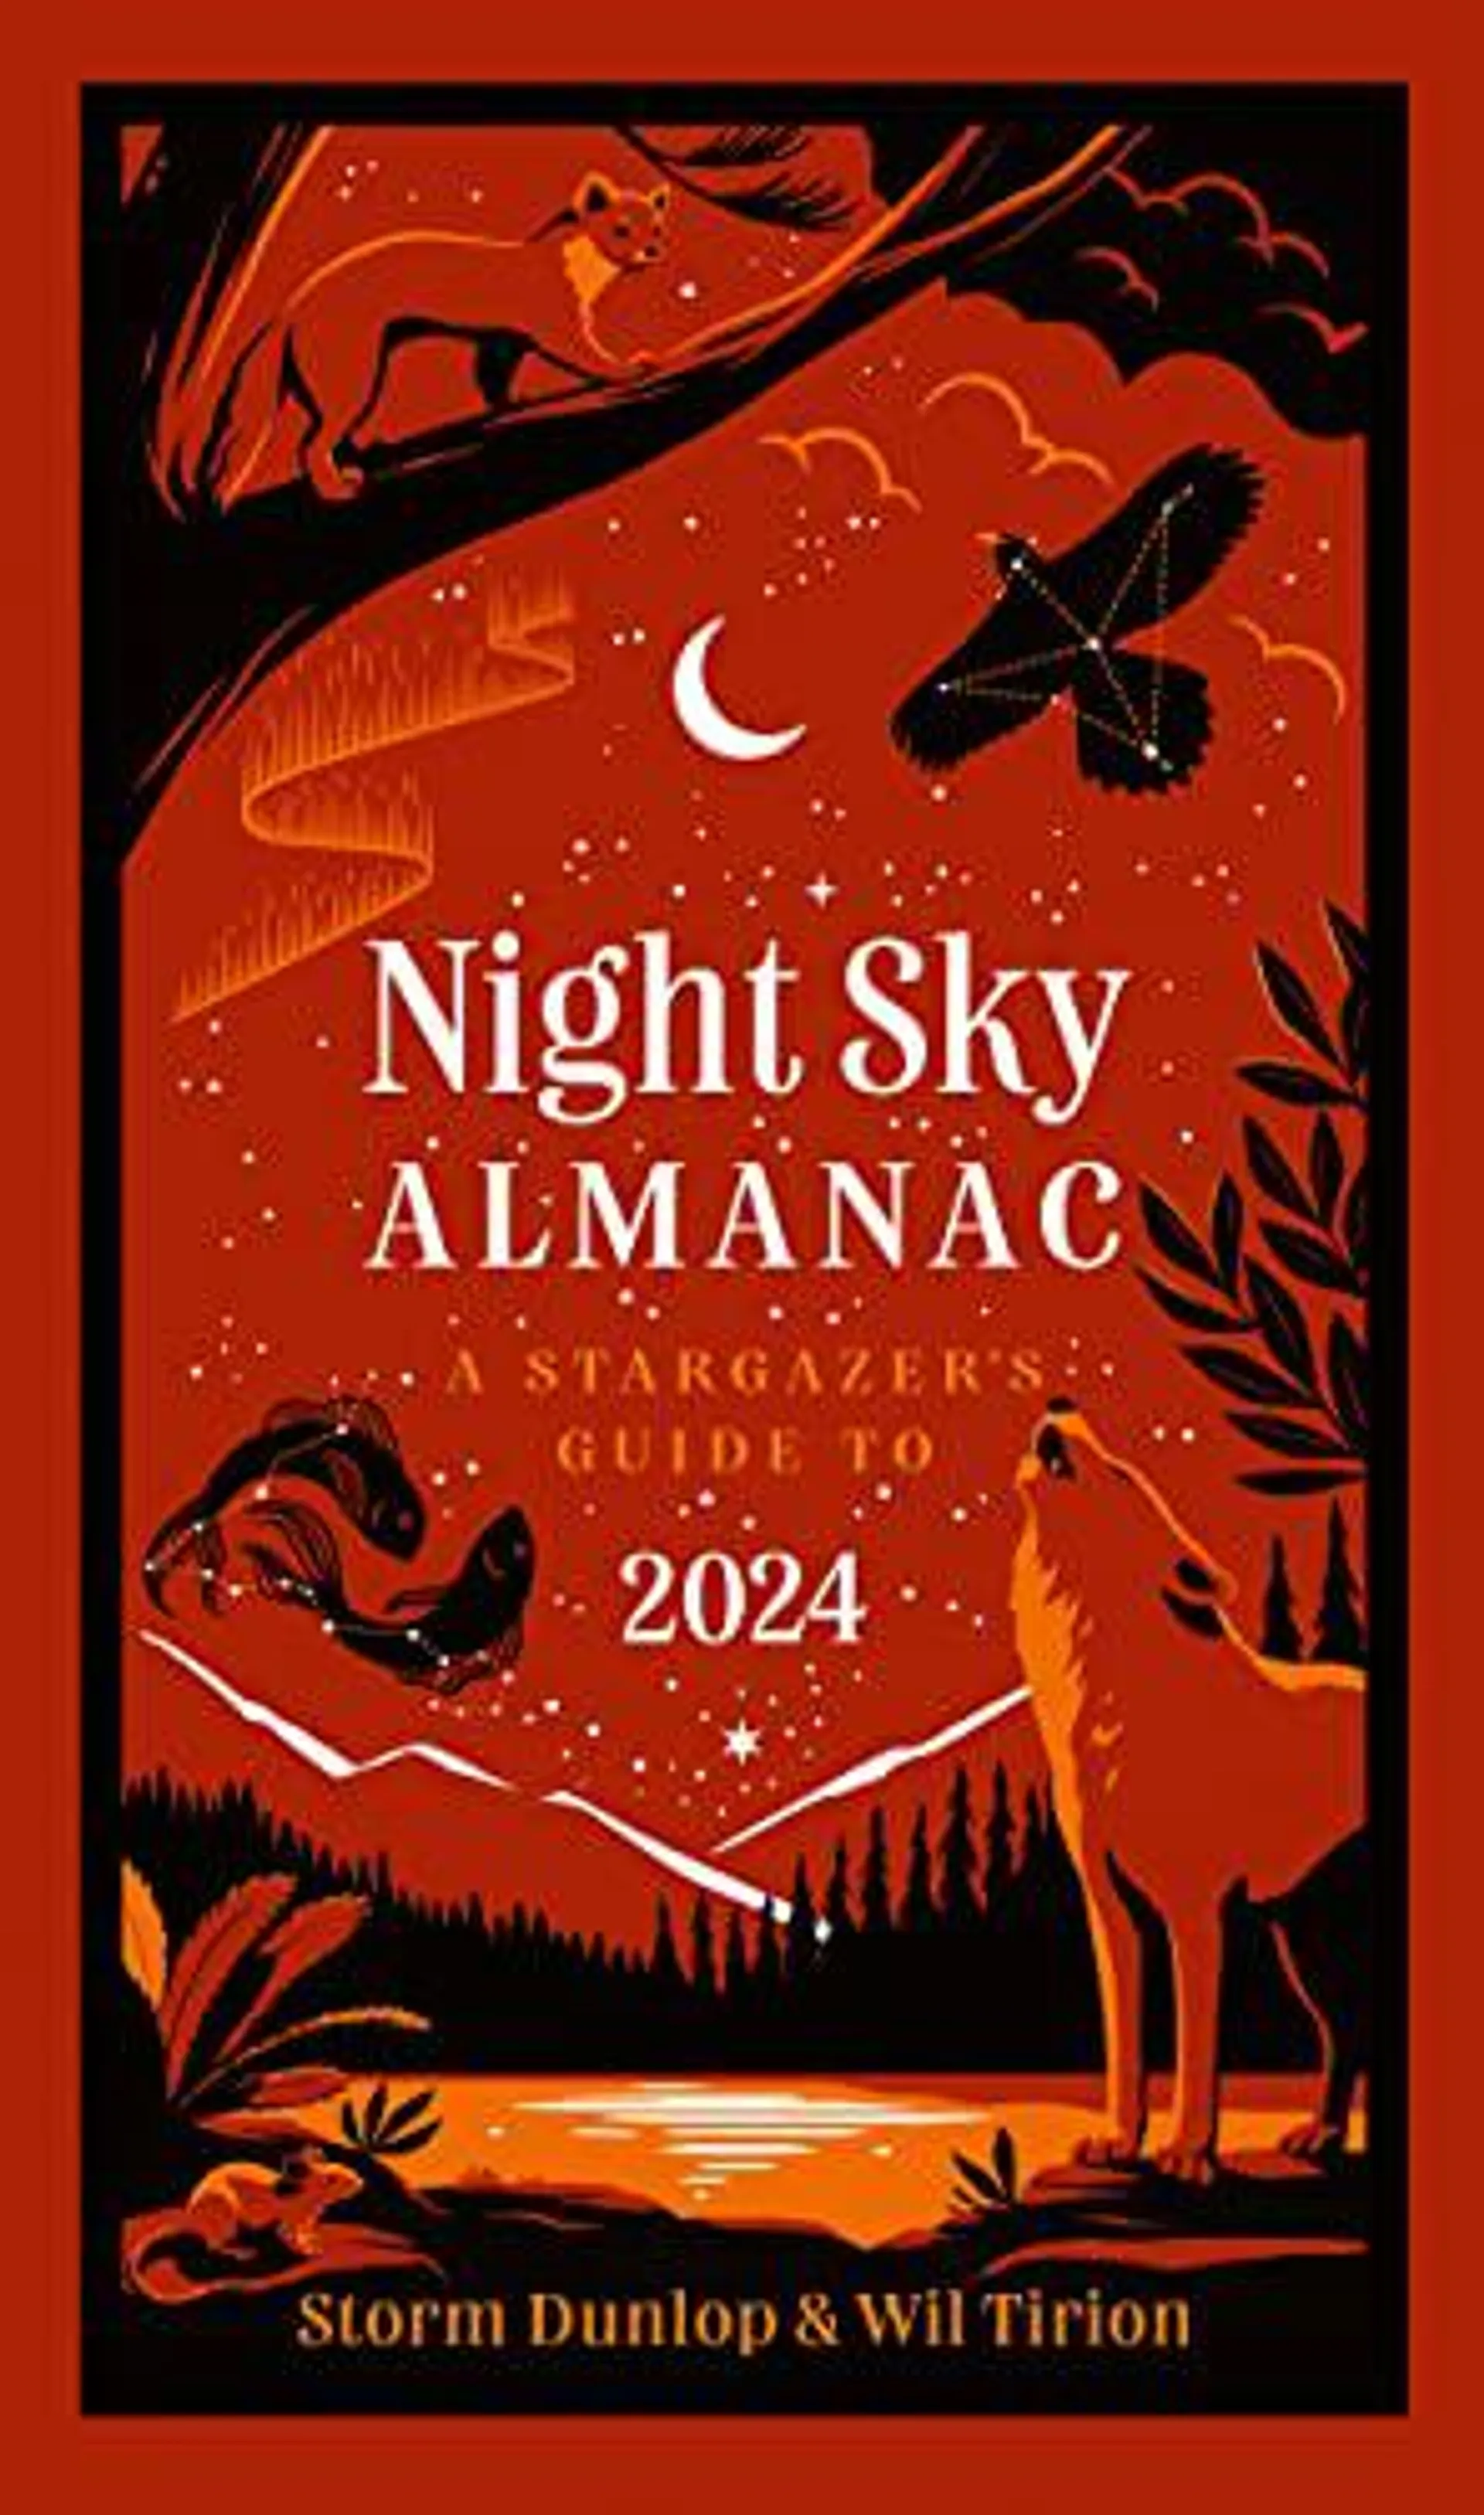 Night Sky Almanac 2024 by Storm Dunlop